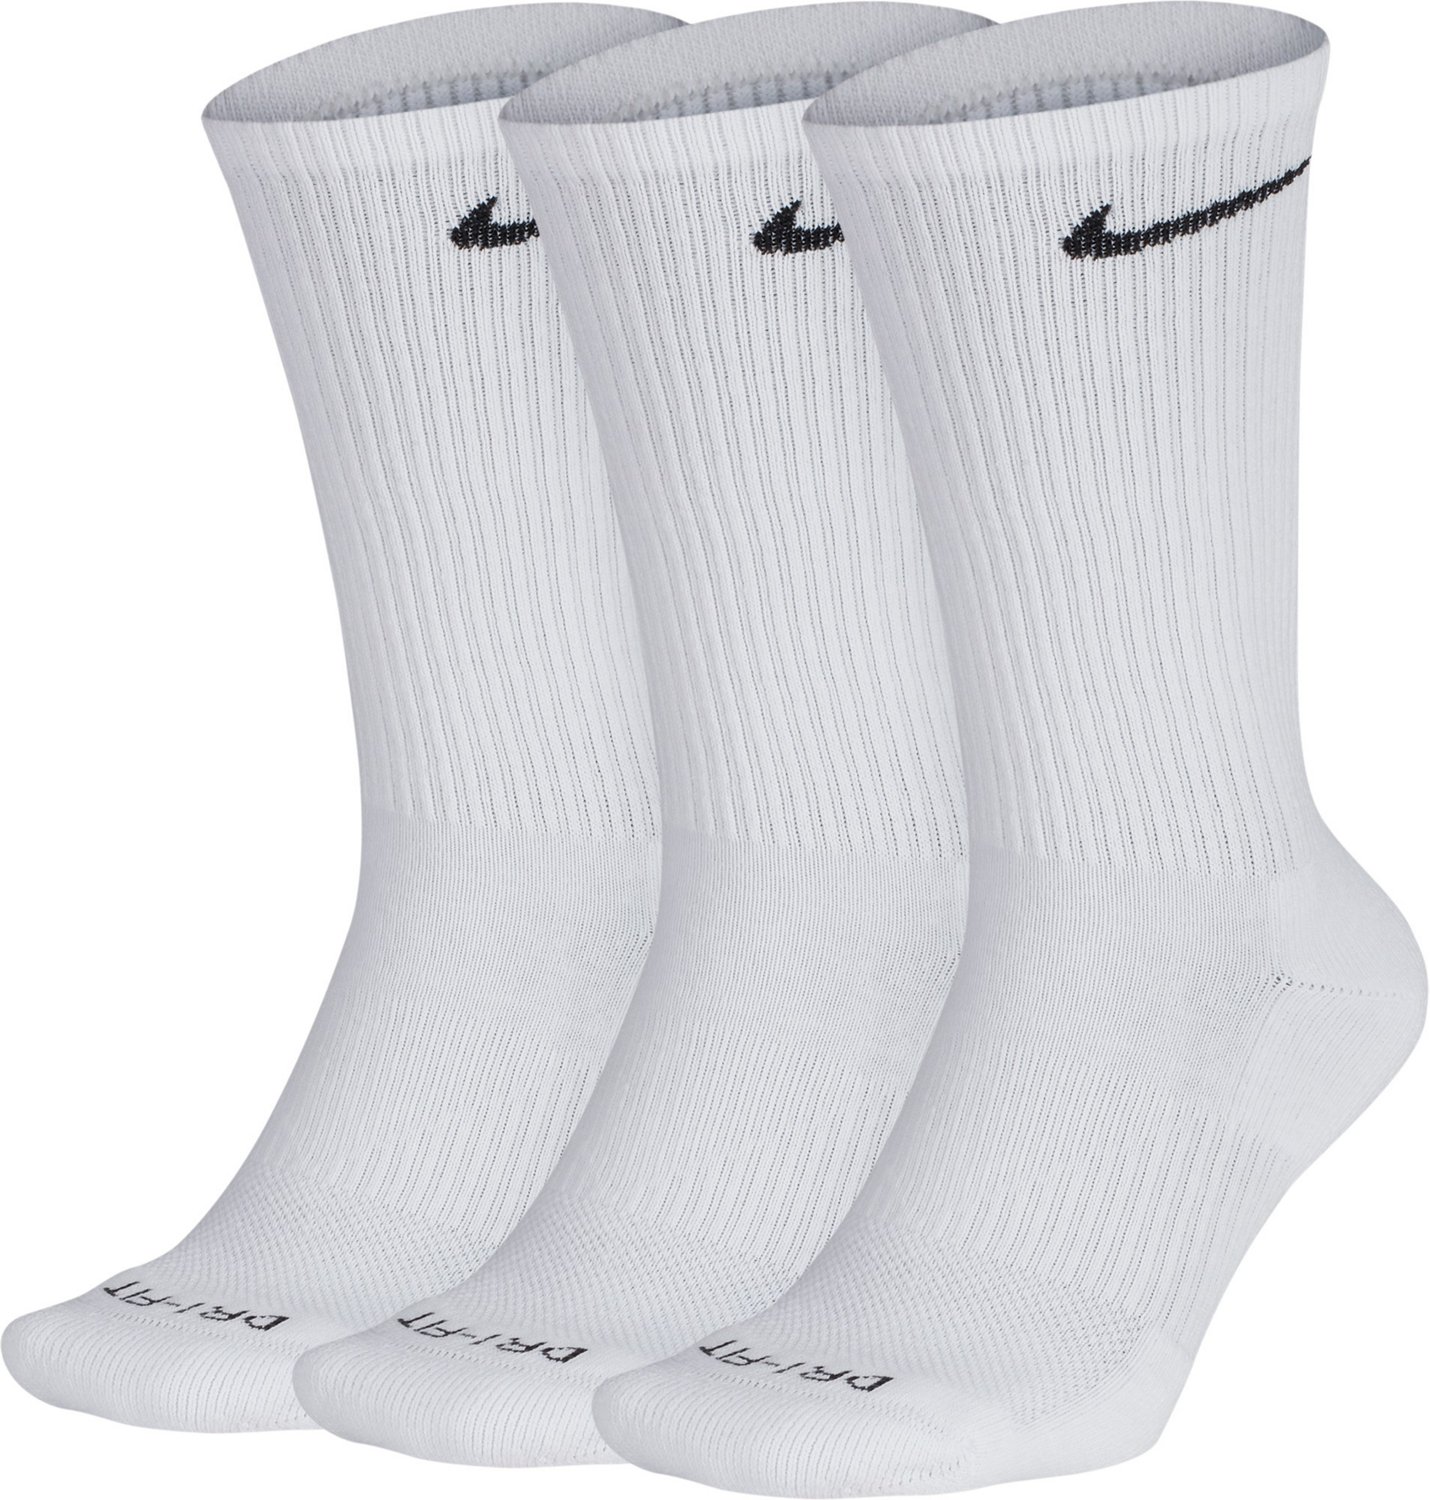 Nike Plus Cushion Training Crew Socks 3 Pack | Academy